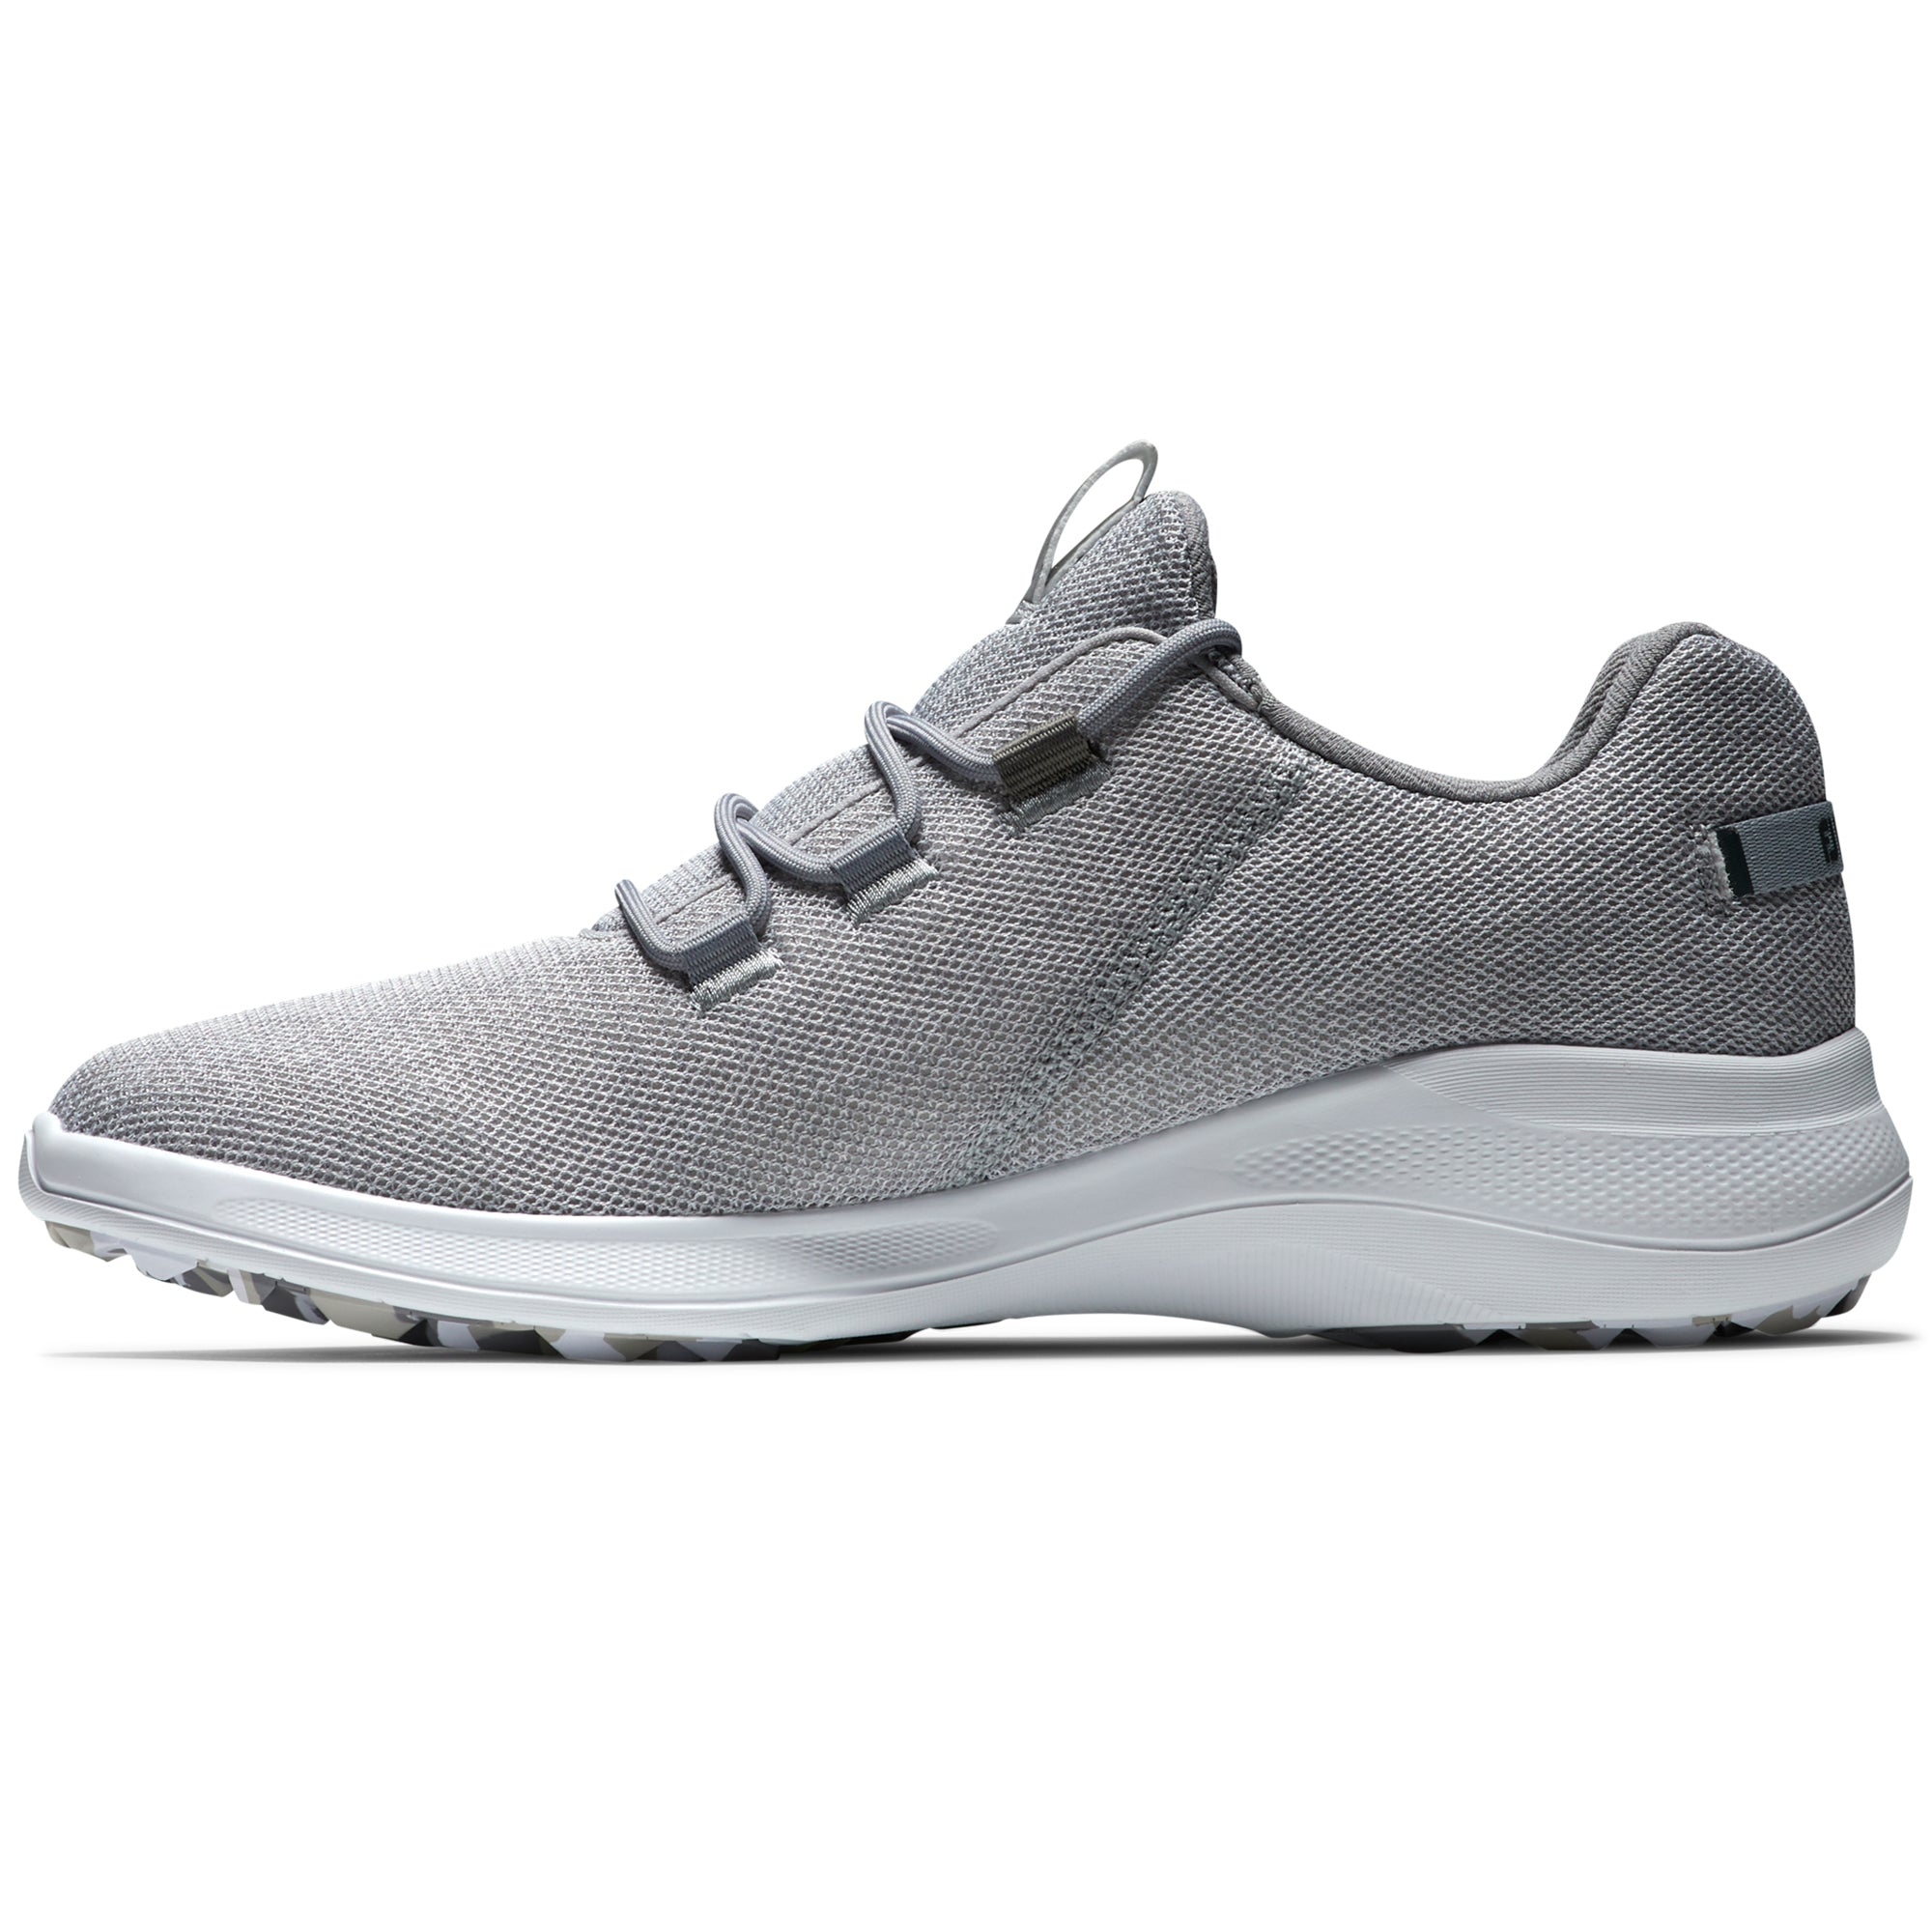 footjoy-fj-flex-coastal-golf-shoes-56138-white-grey